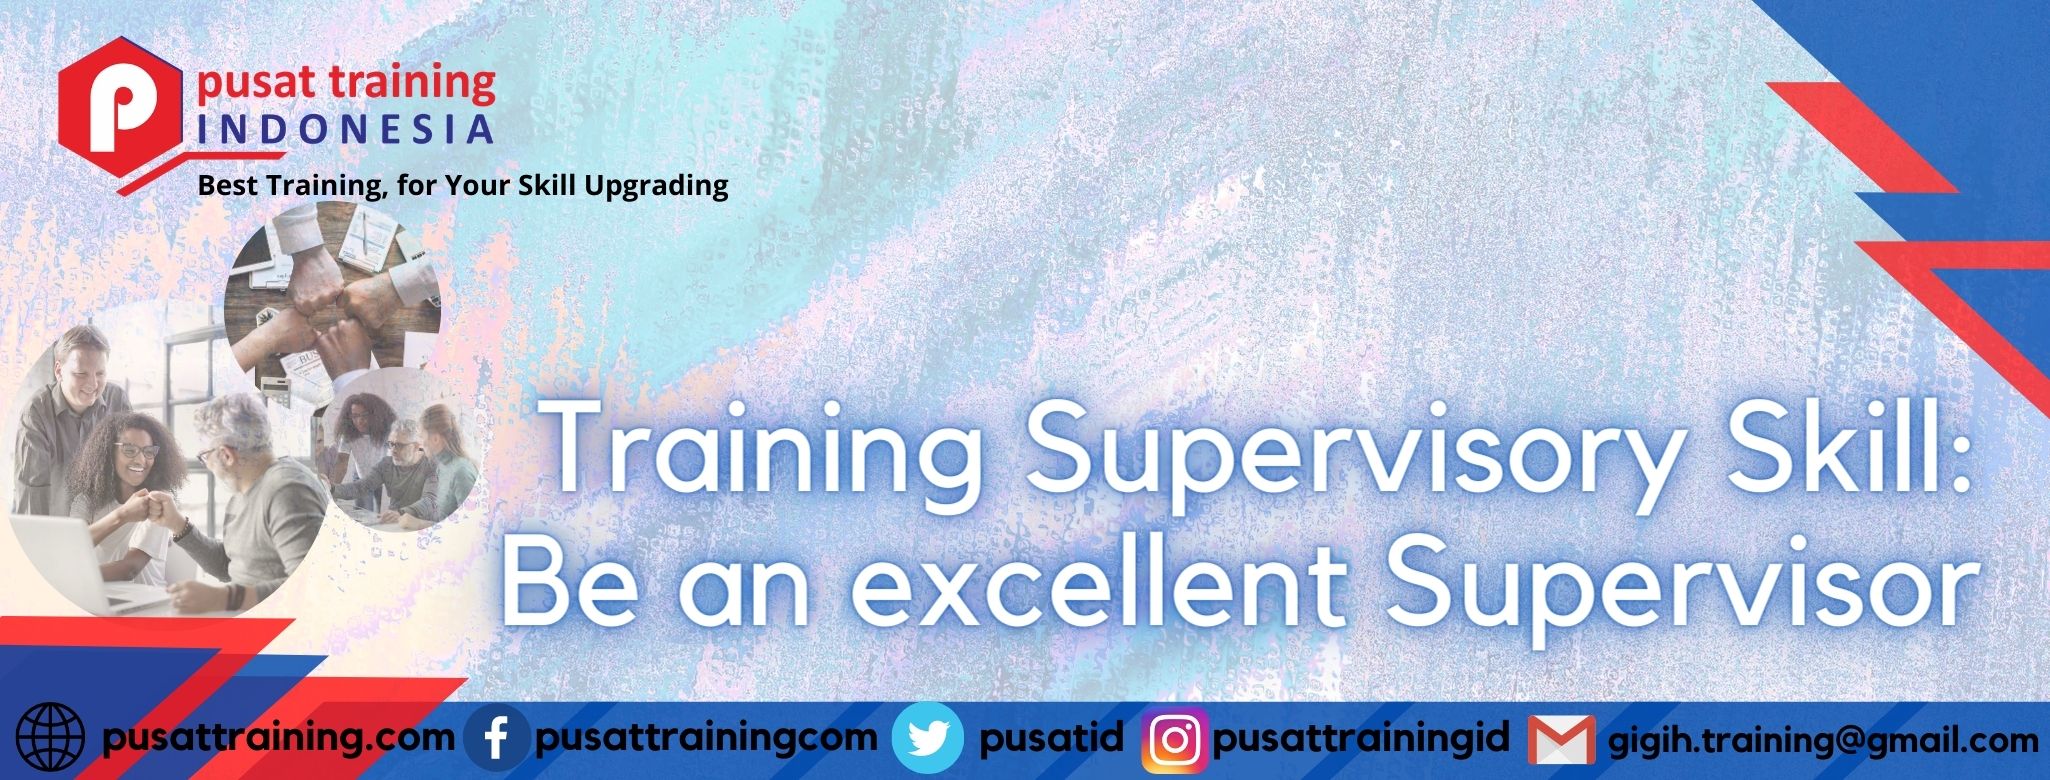 Training-Supervisory-Skill-Be-an-excellent-Supervisor